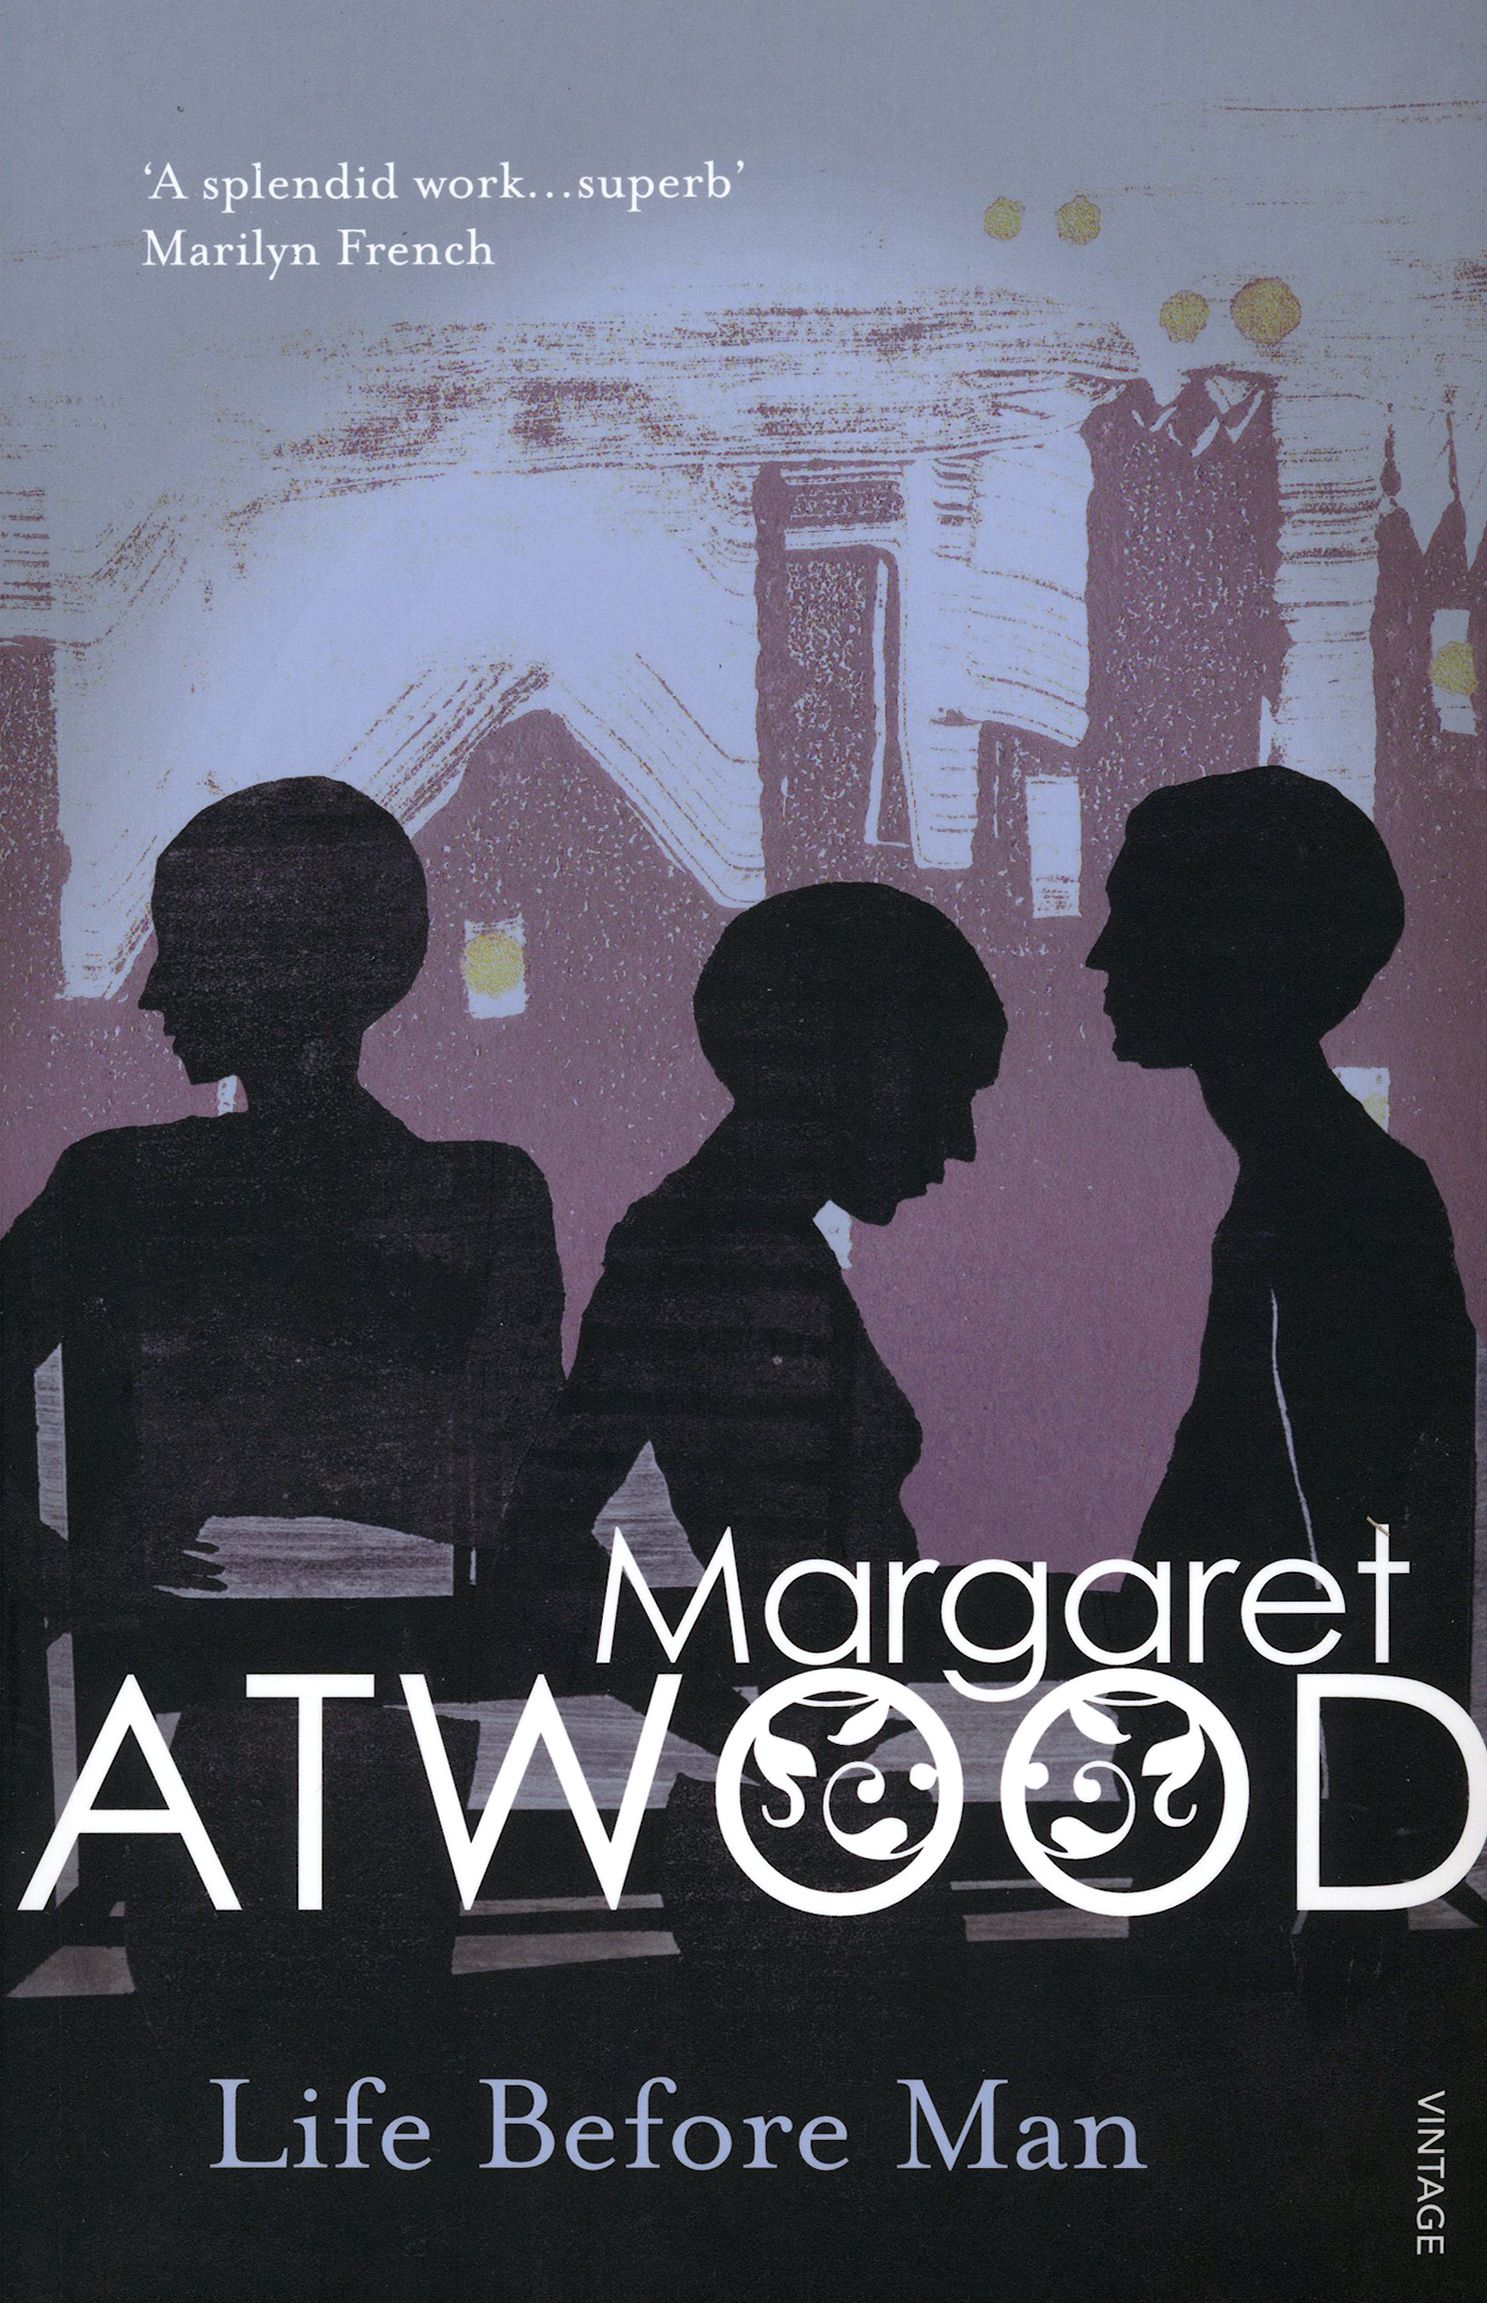 Margaret Atwood Life before man. Life before man. Atwood Margaret "bodily harm".